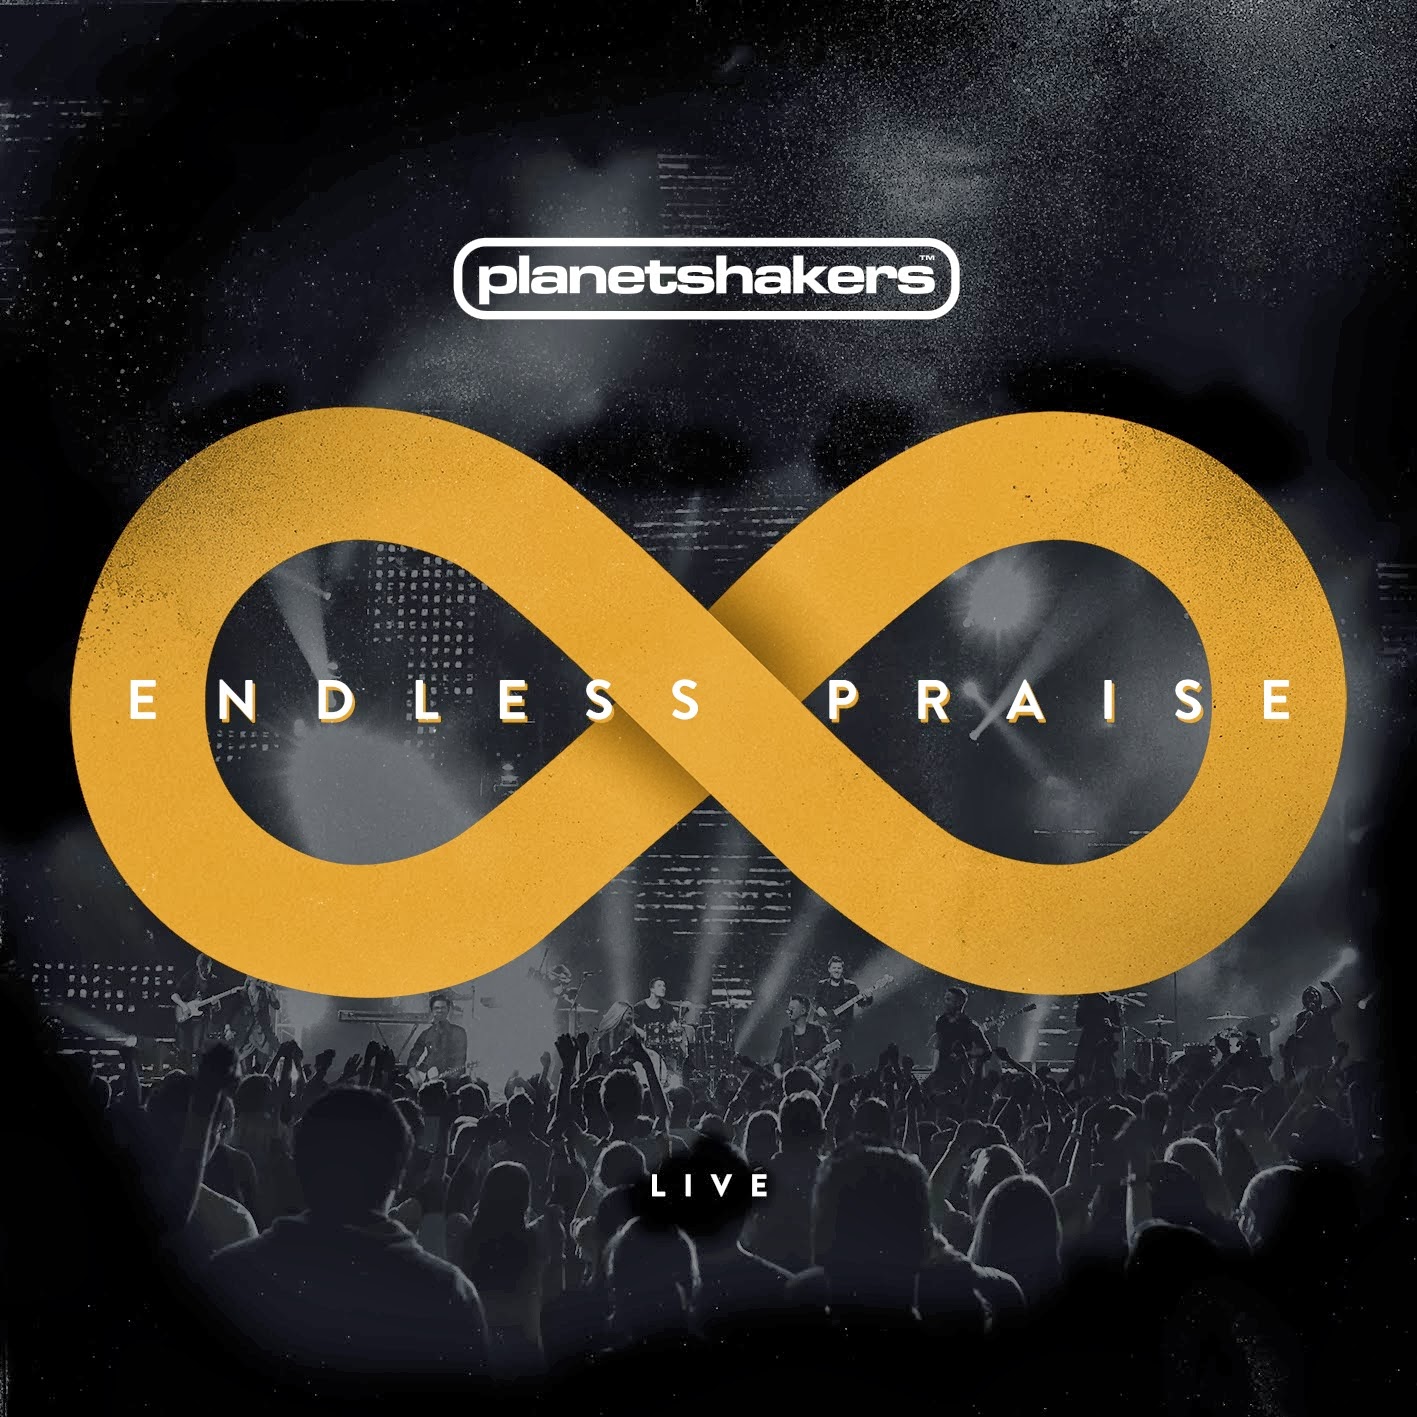 Planetshakers Band - Endless Praise Live 2014 English Christian Album Download